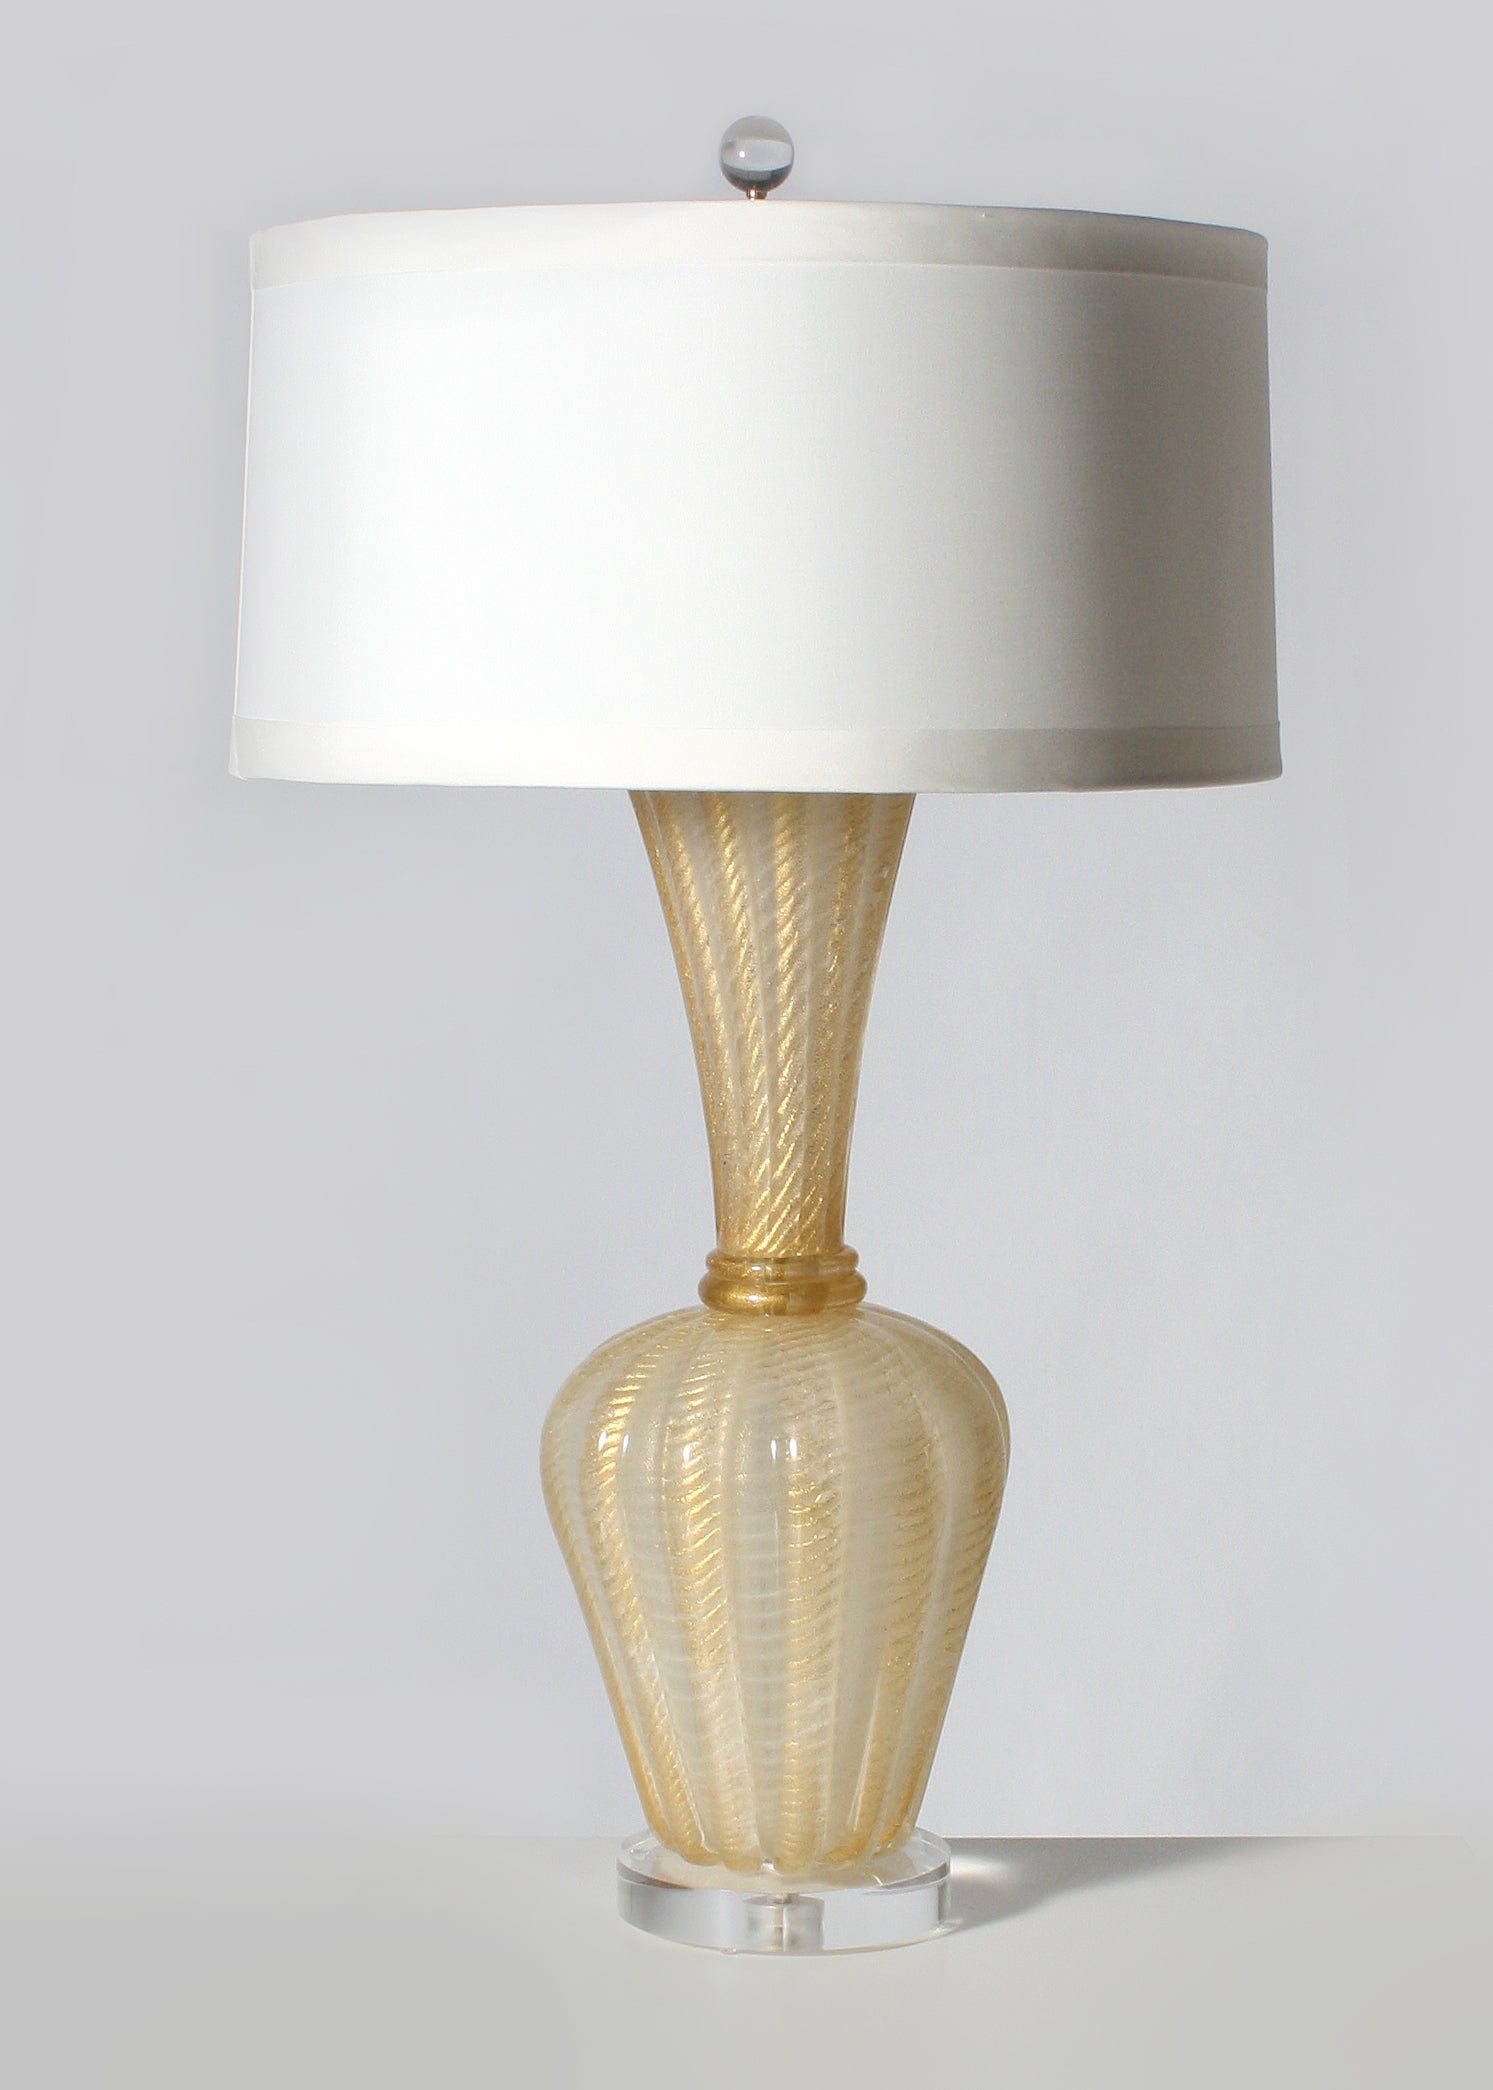 Cordonato Oro Barovier Murano lamp, c. 1950